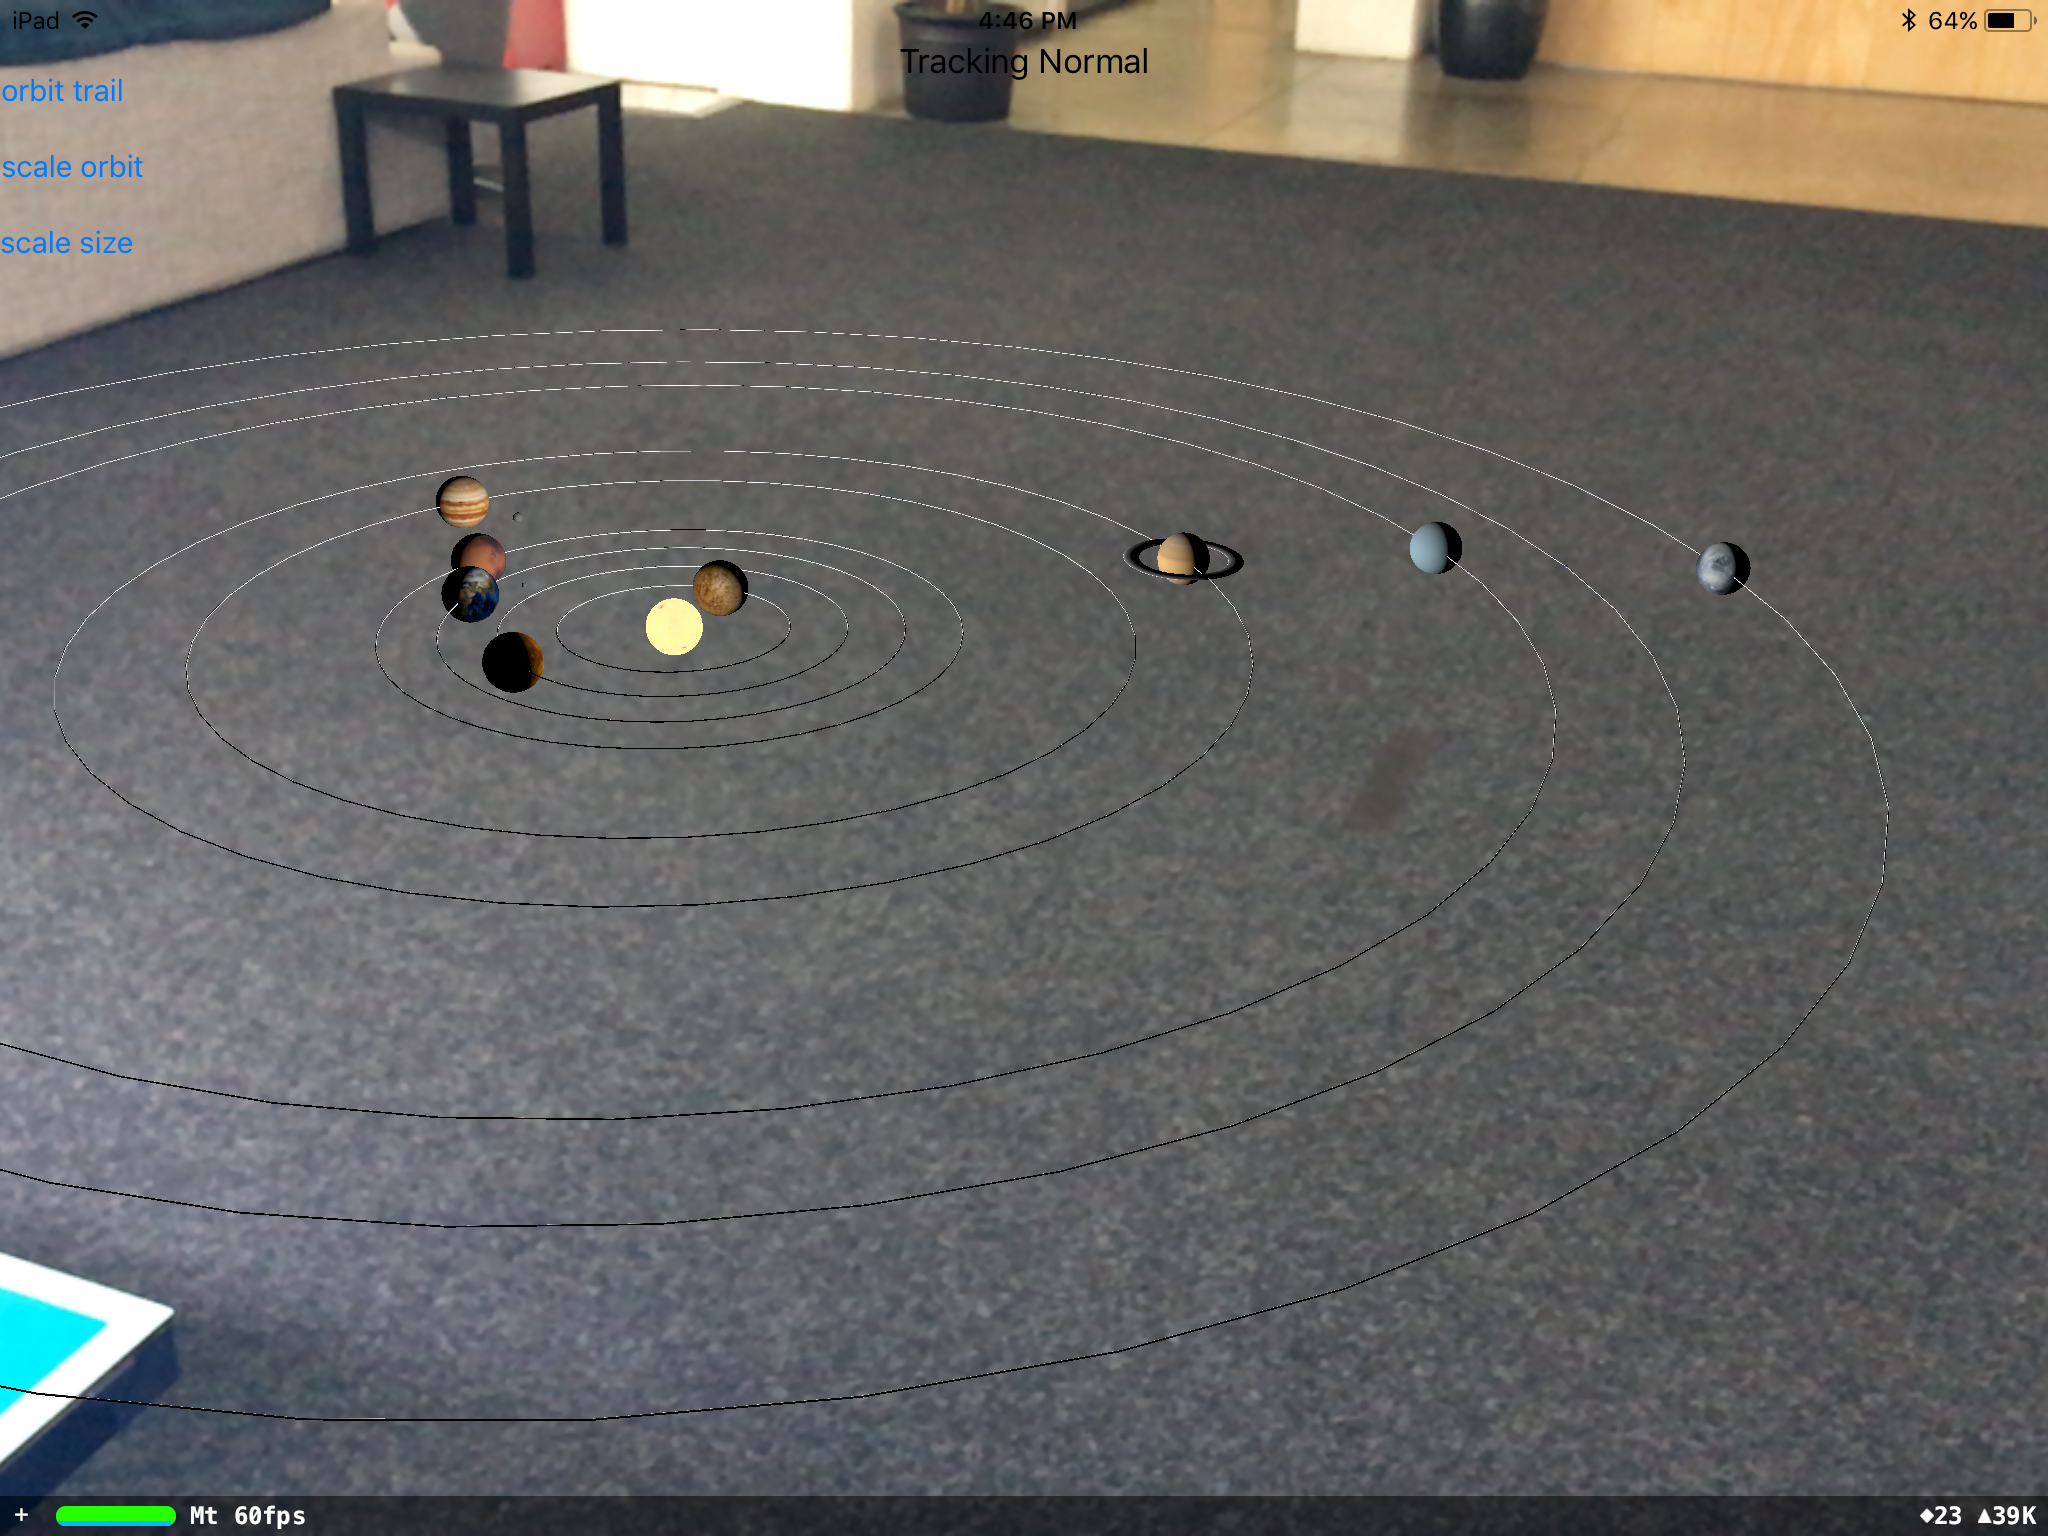 Solar System on the floor